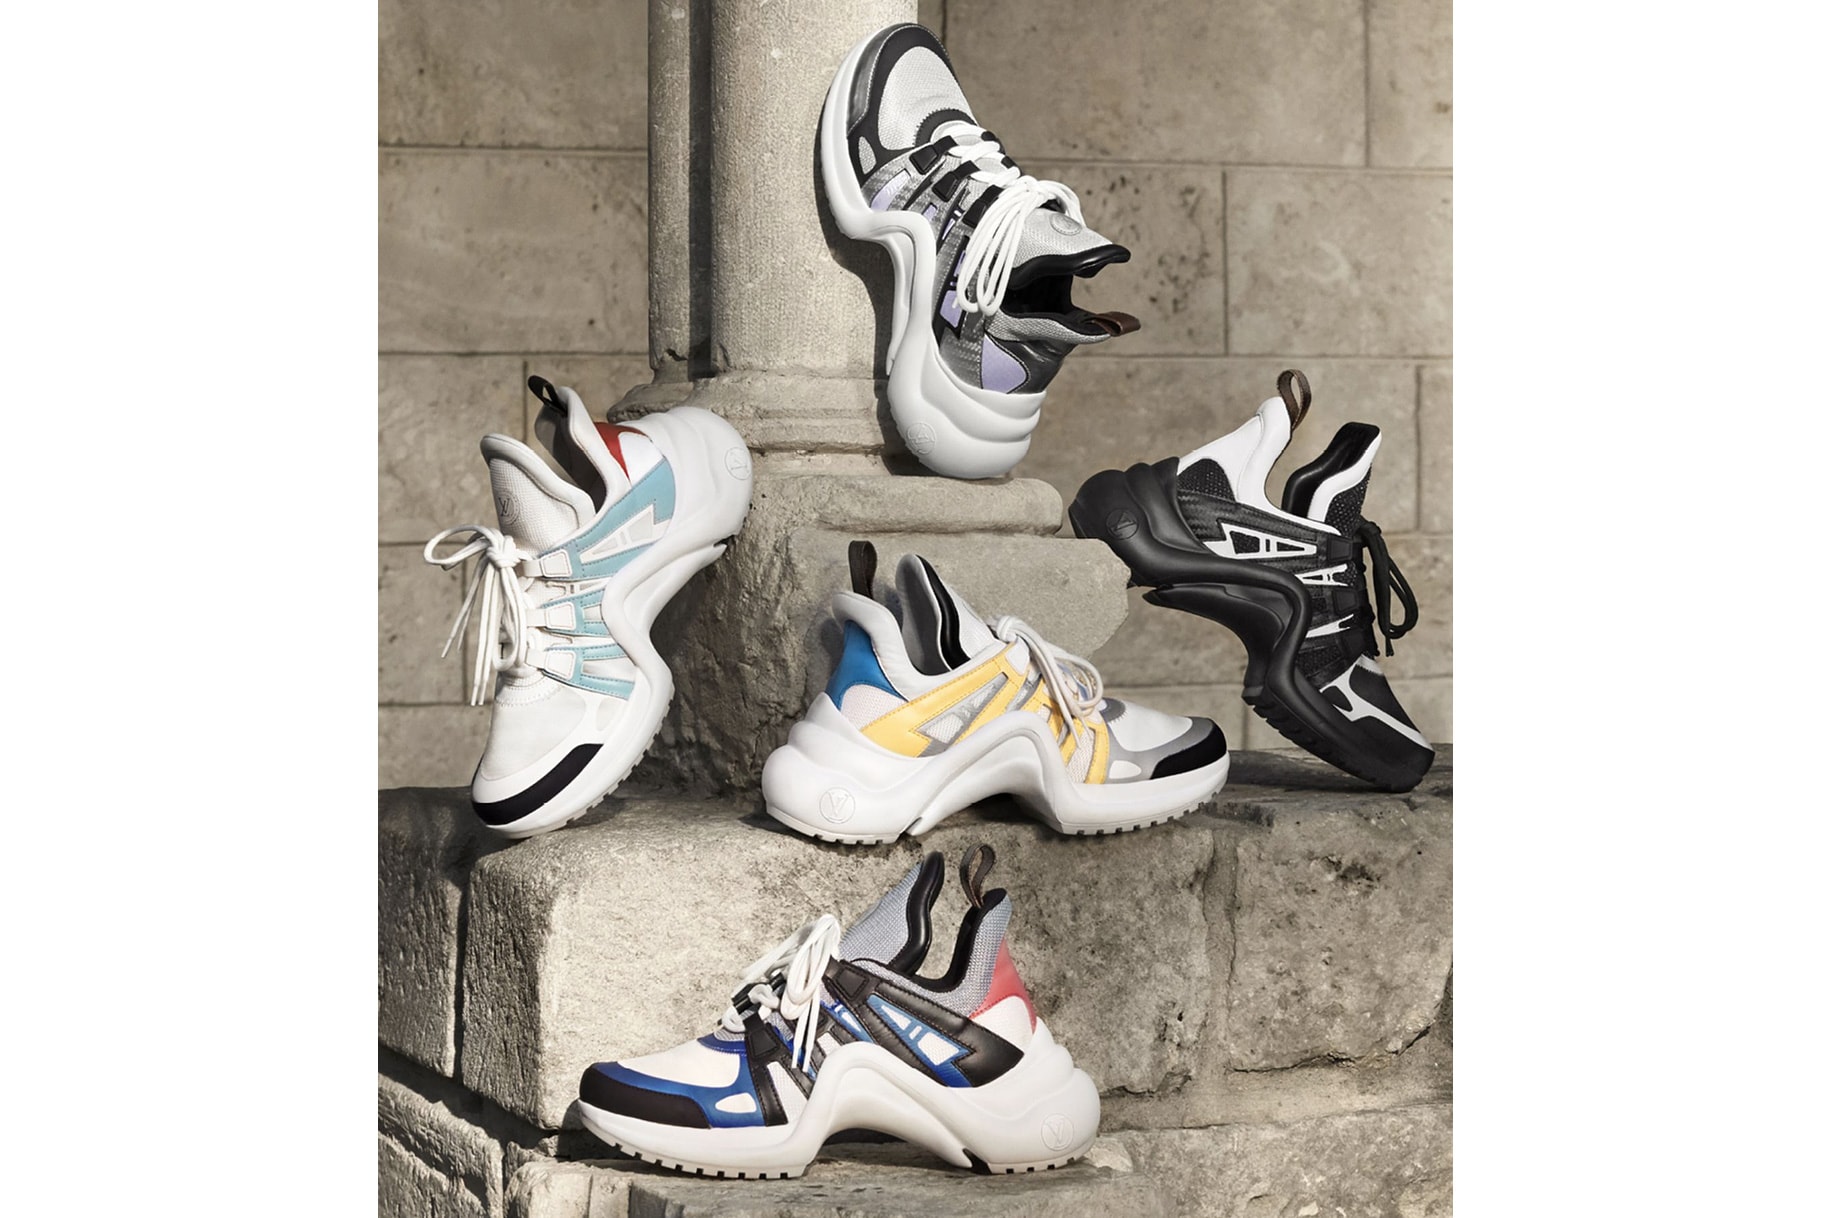 Louis Vuitton Spring Summer 2018 Archlight sneaker february release date info shoes footwear